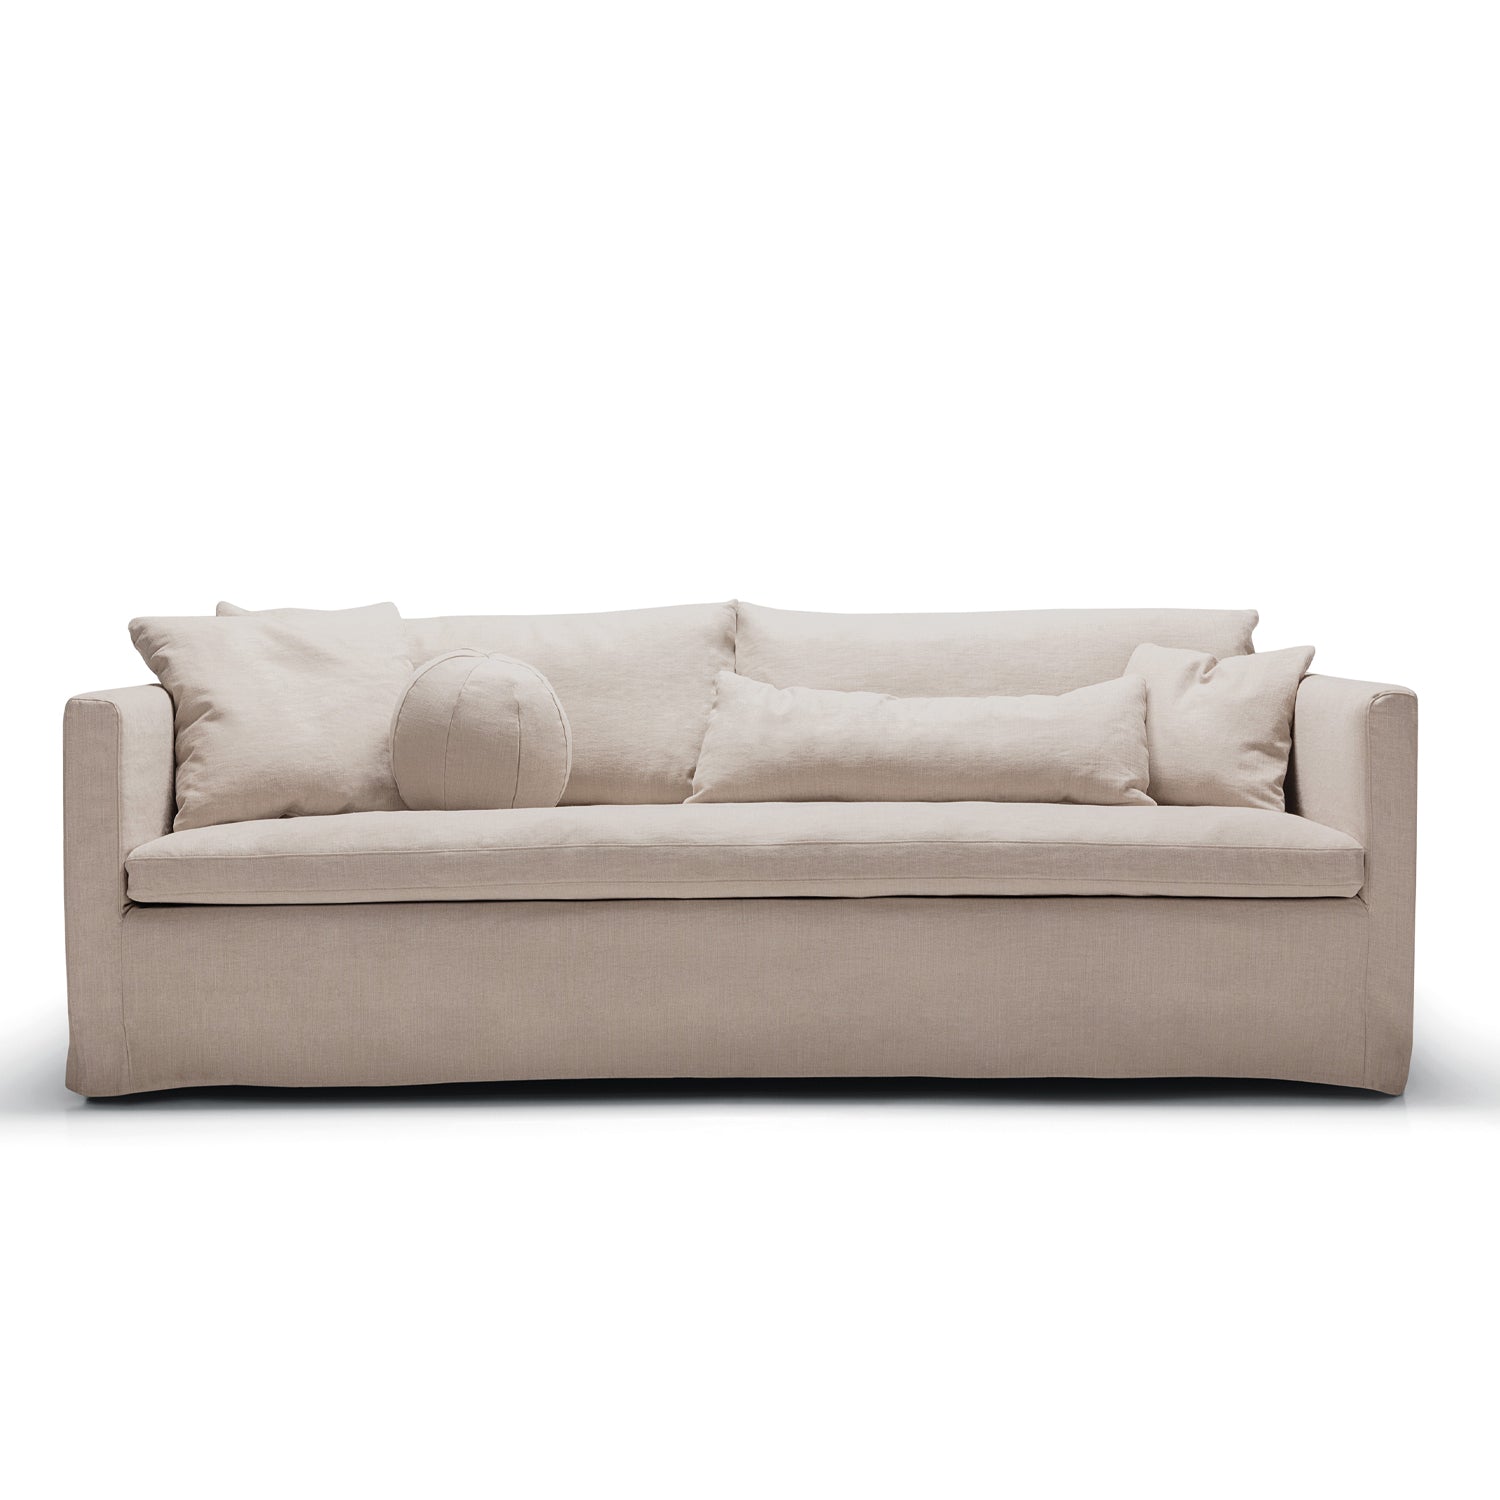 Standard 3 Seater Sofa - Fudge